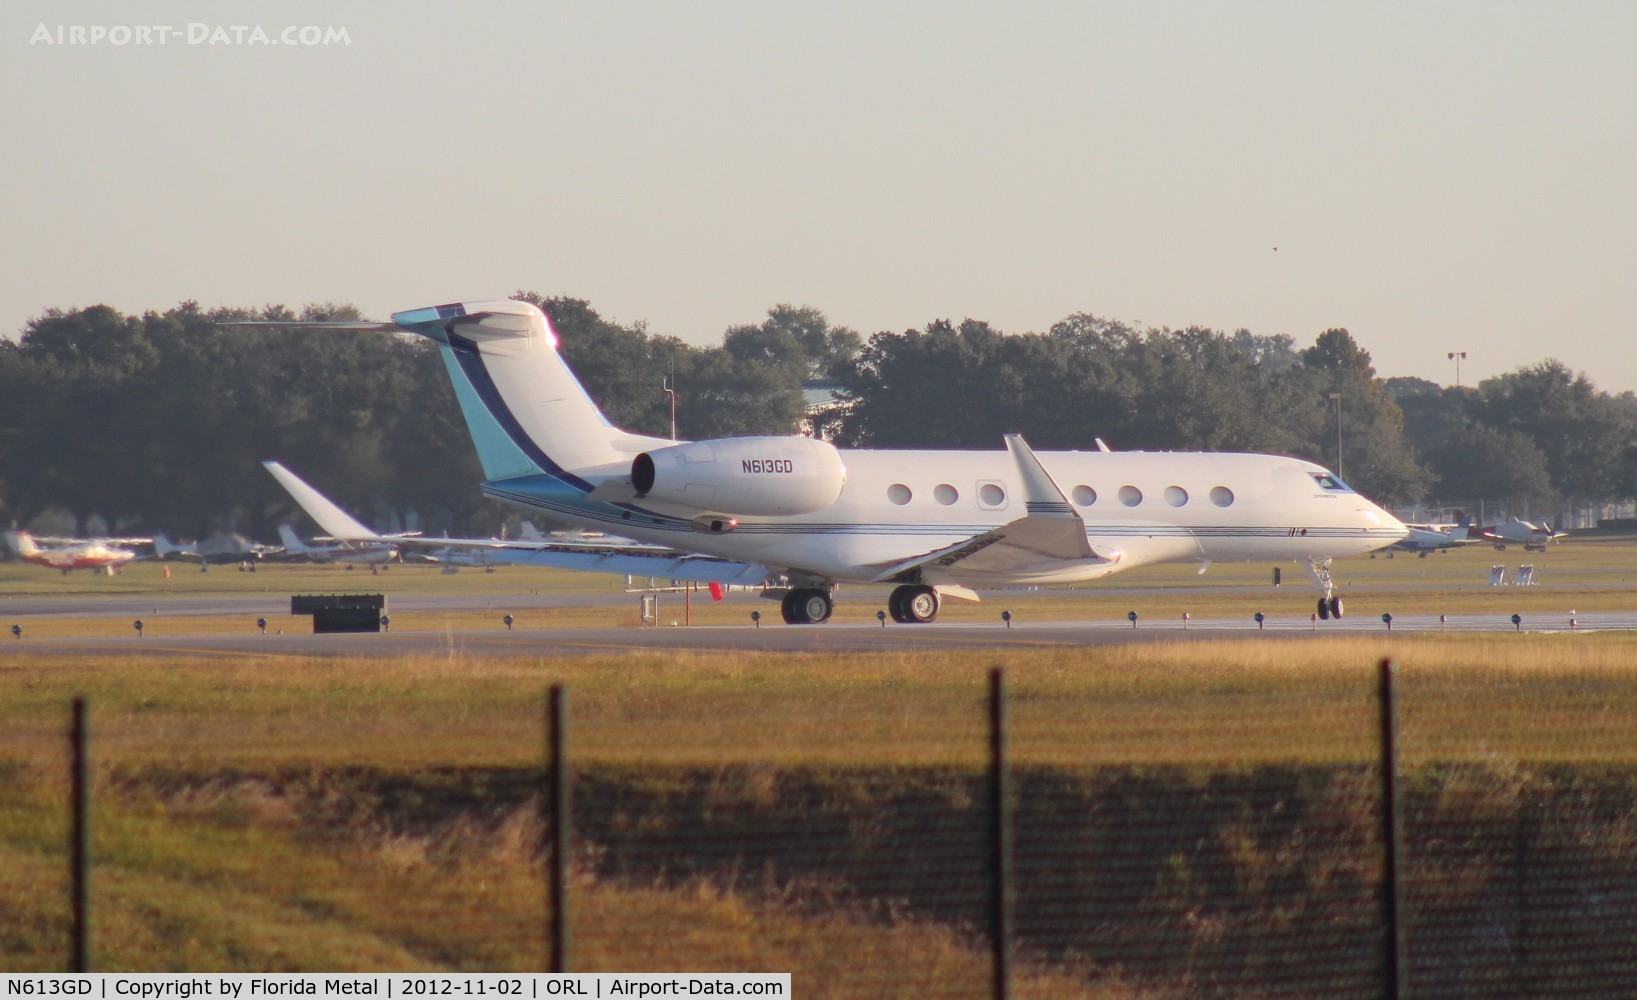 N613GD, 2011 Gulfstream Aerospace G650 (G-VI) C/N 6013, Gulfstream 650 arriving at NBAA